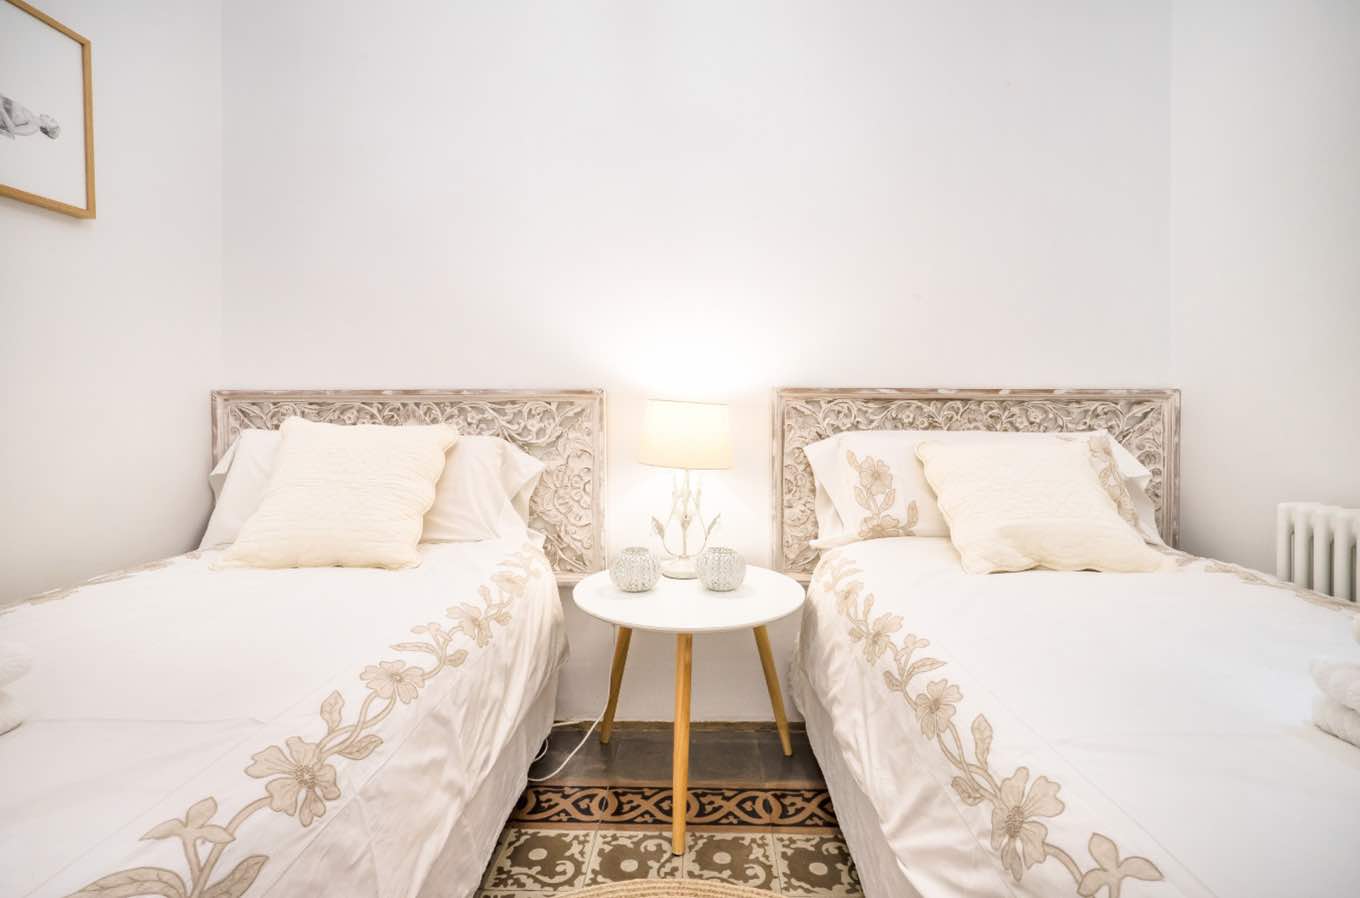 conserjería airbnb gestión de apartamento de alquiler corto plazo barcelona